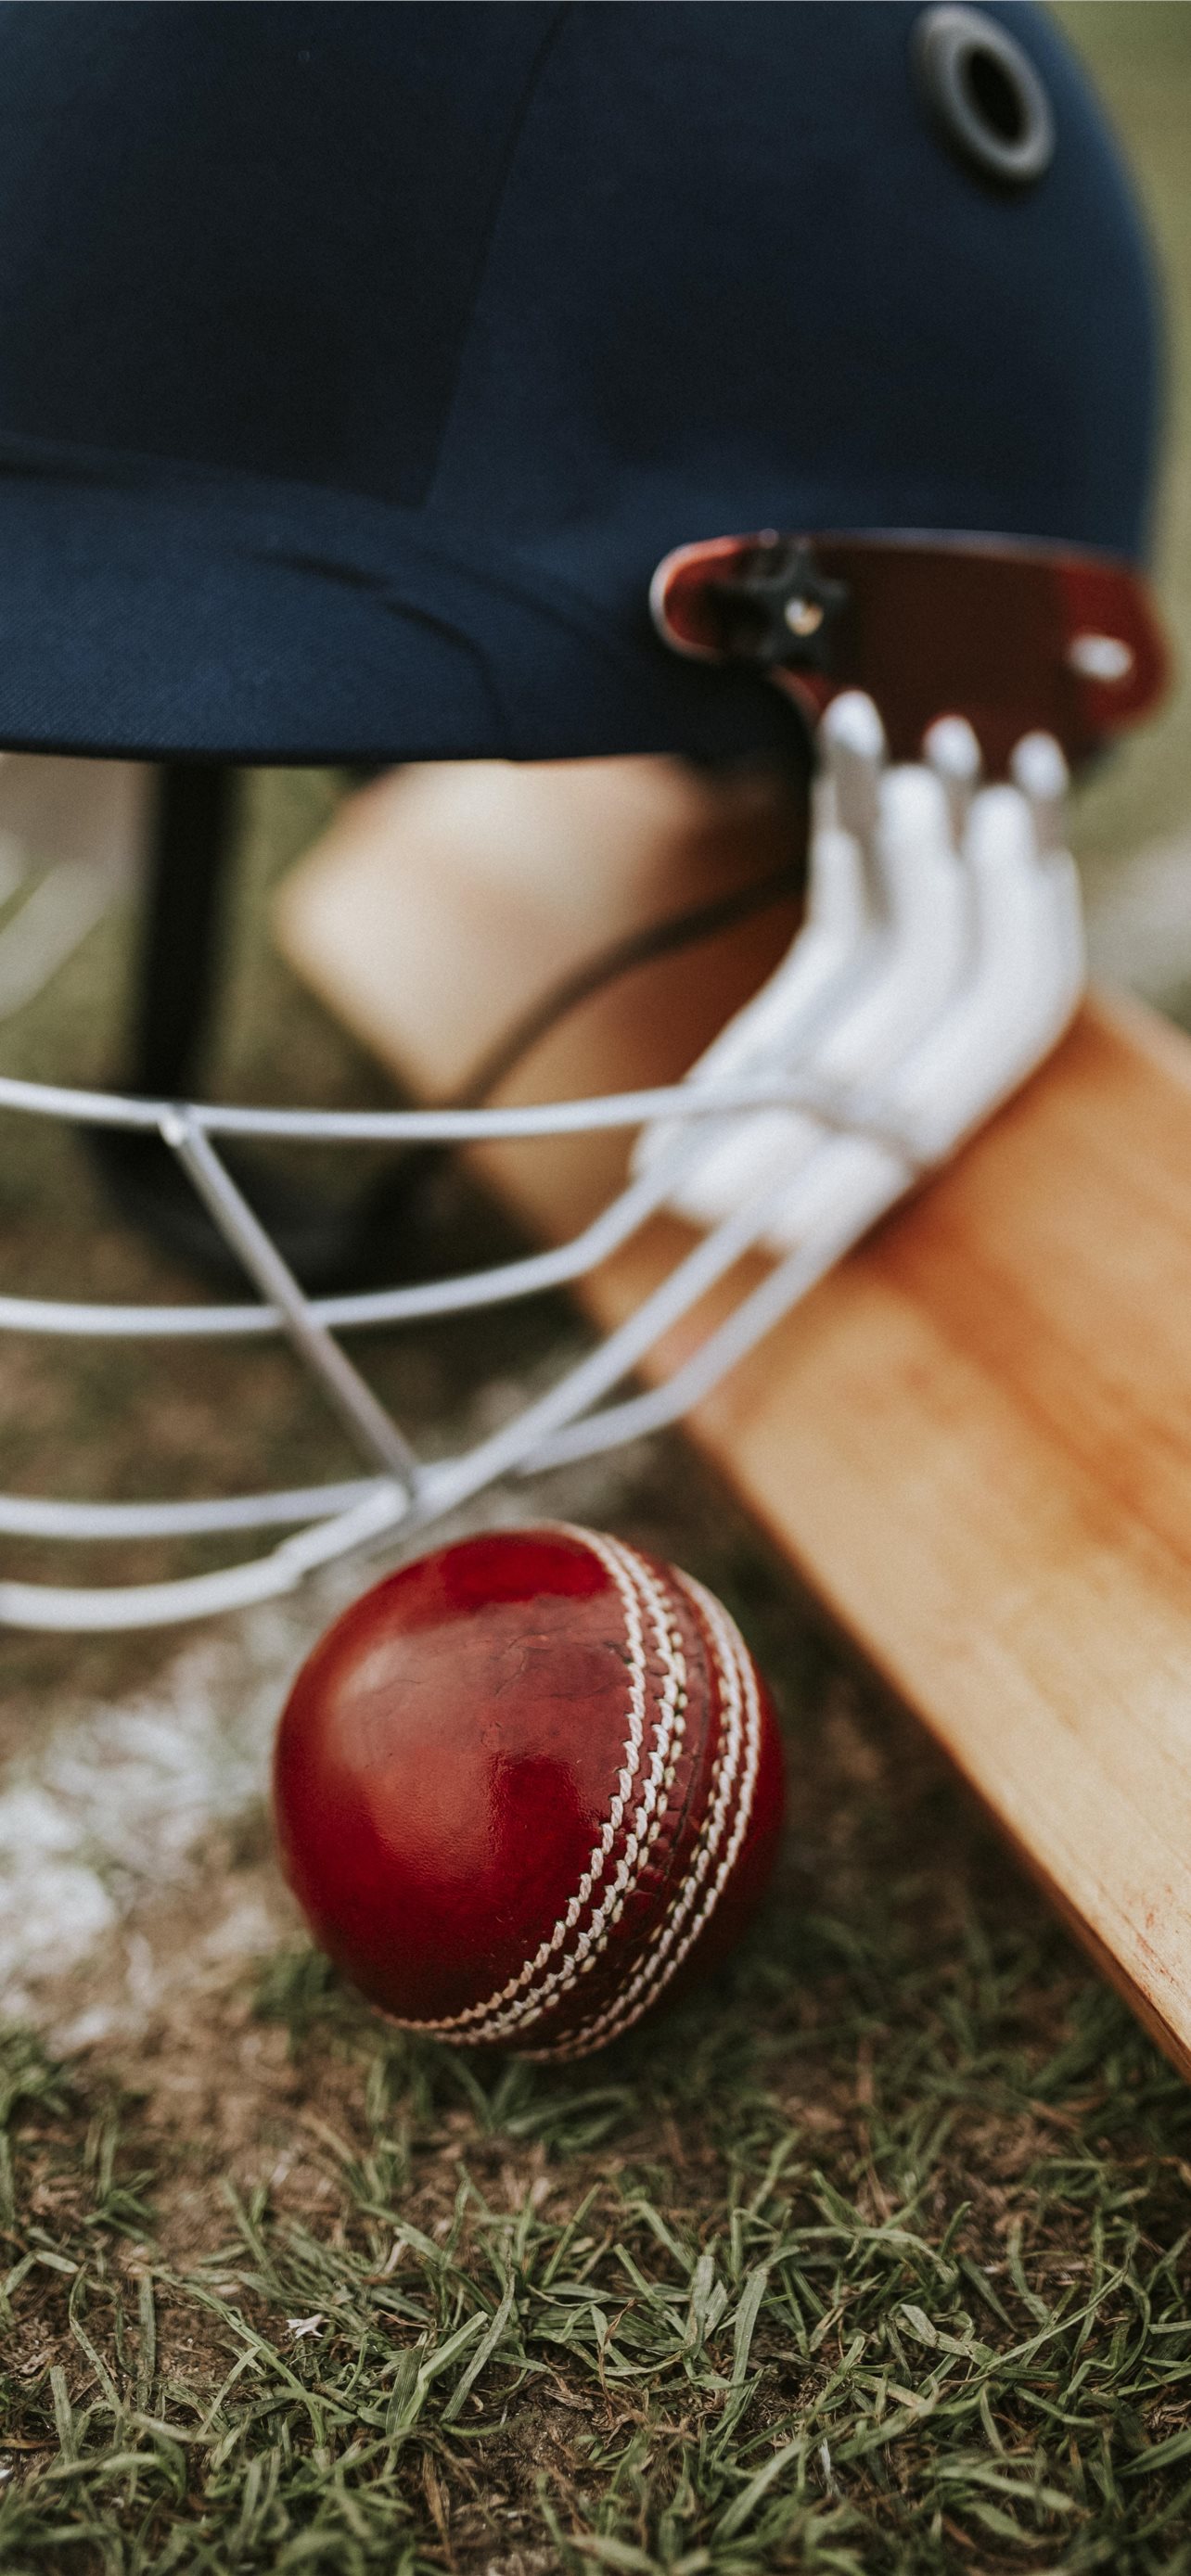 Abstract Cricket Background Royalty-Free Stock Image - Storyblocks